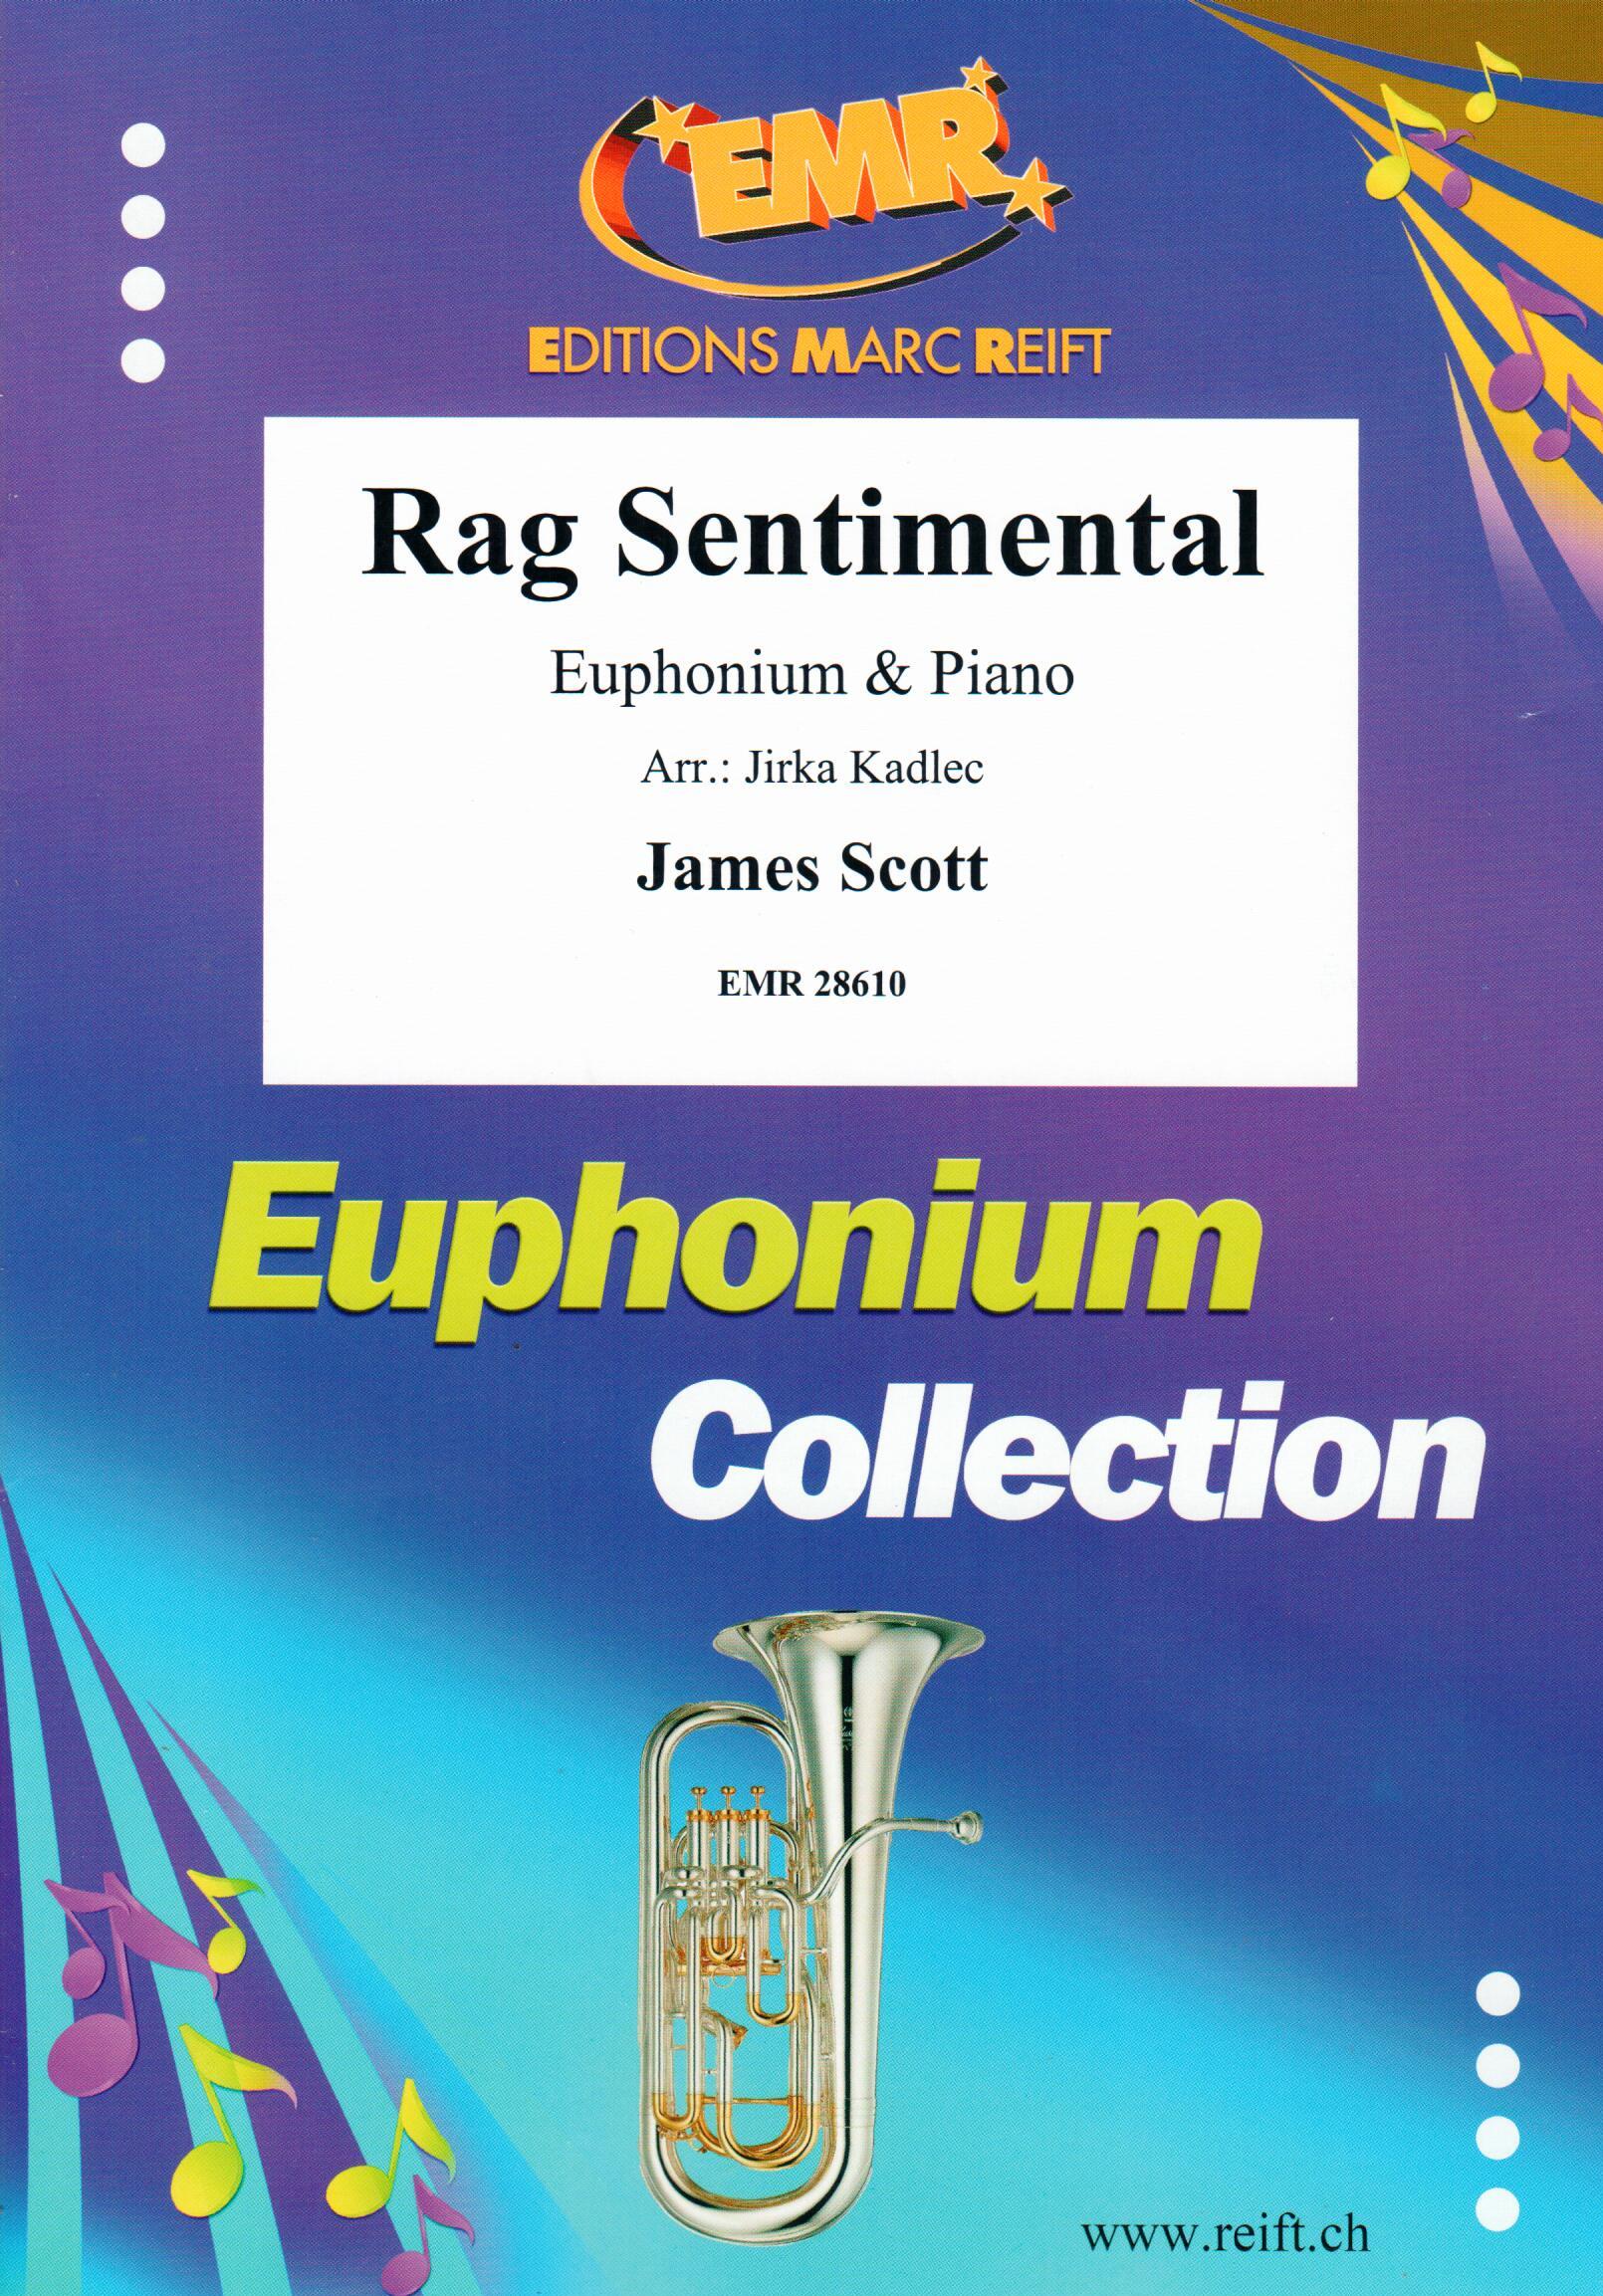 RAG SENTIMENTAL, SOLOS - Euphonium